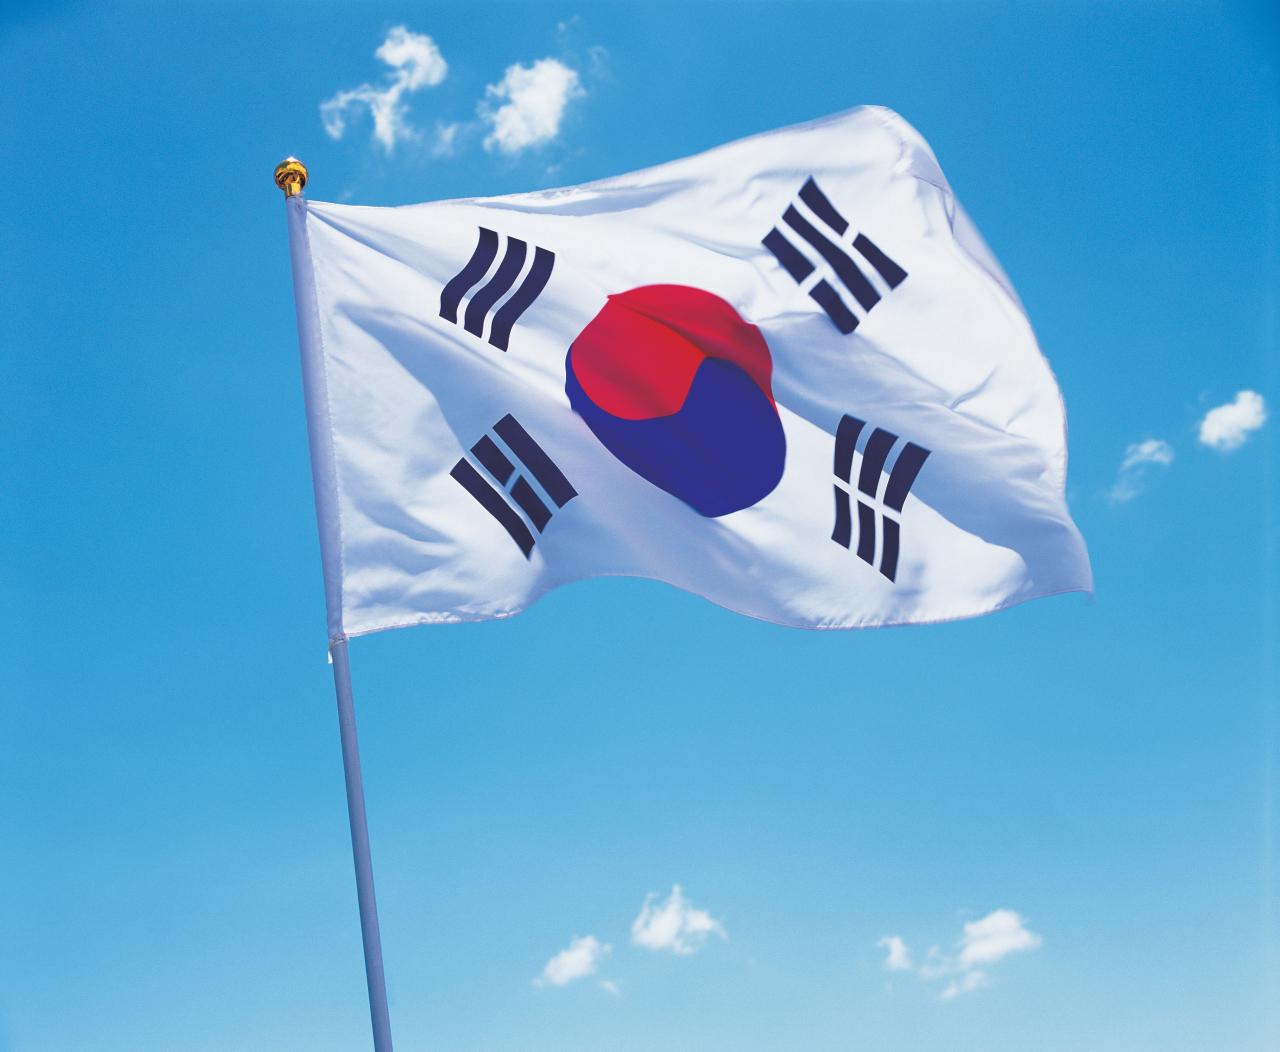 The national flag of South Korea (123rf)